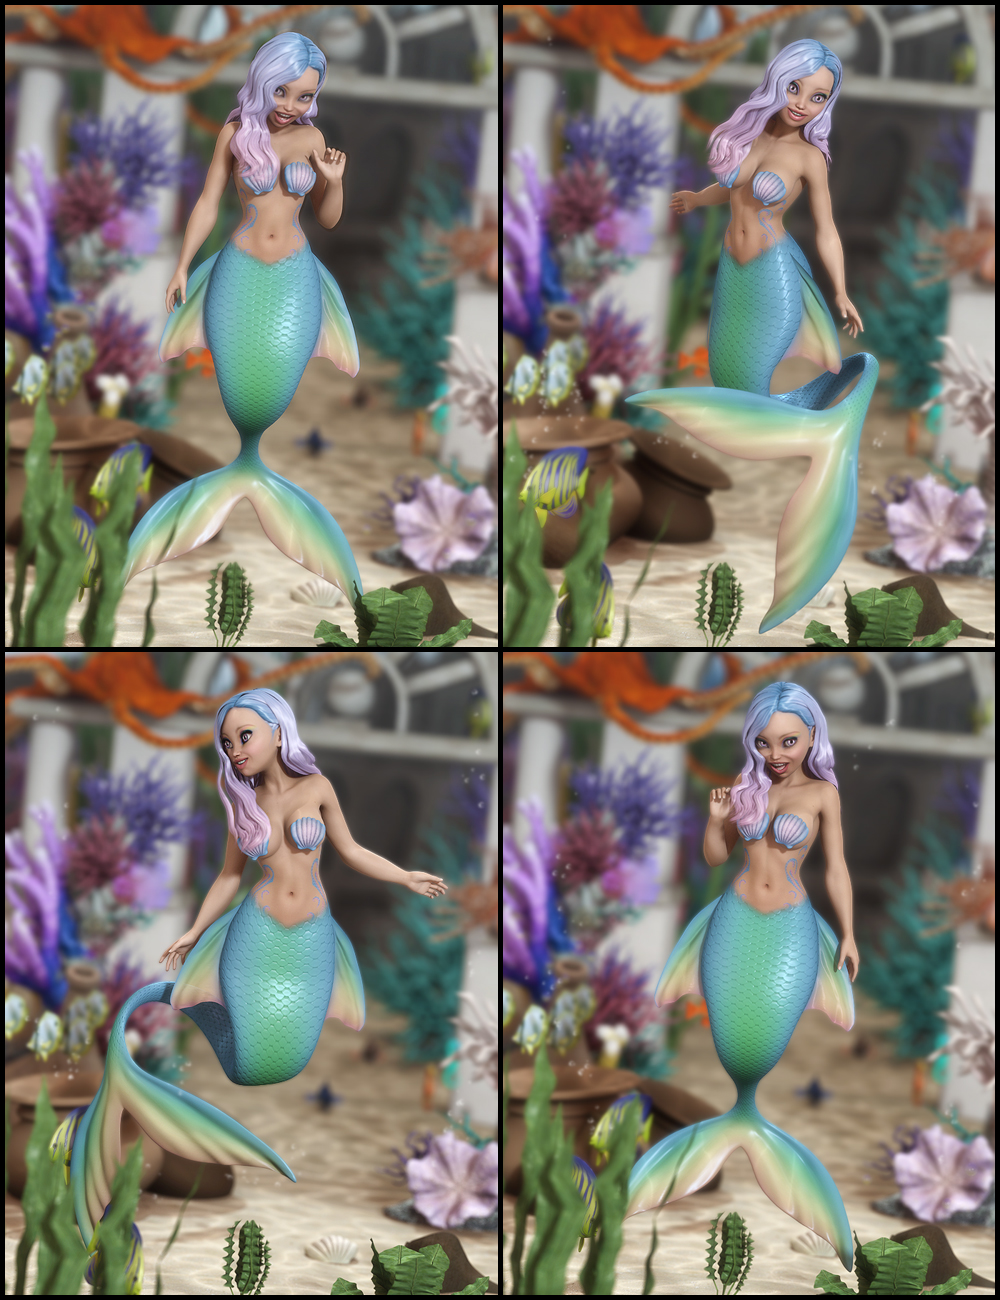 Lil' Mermaid Poses